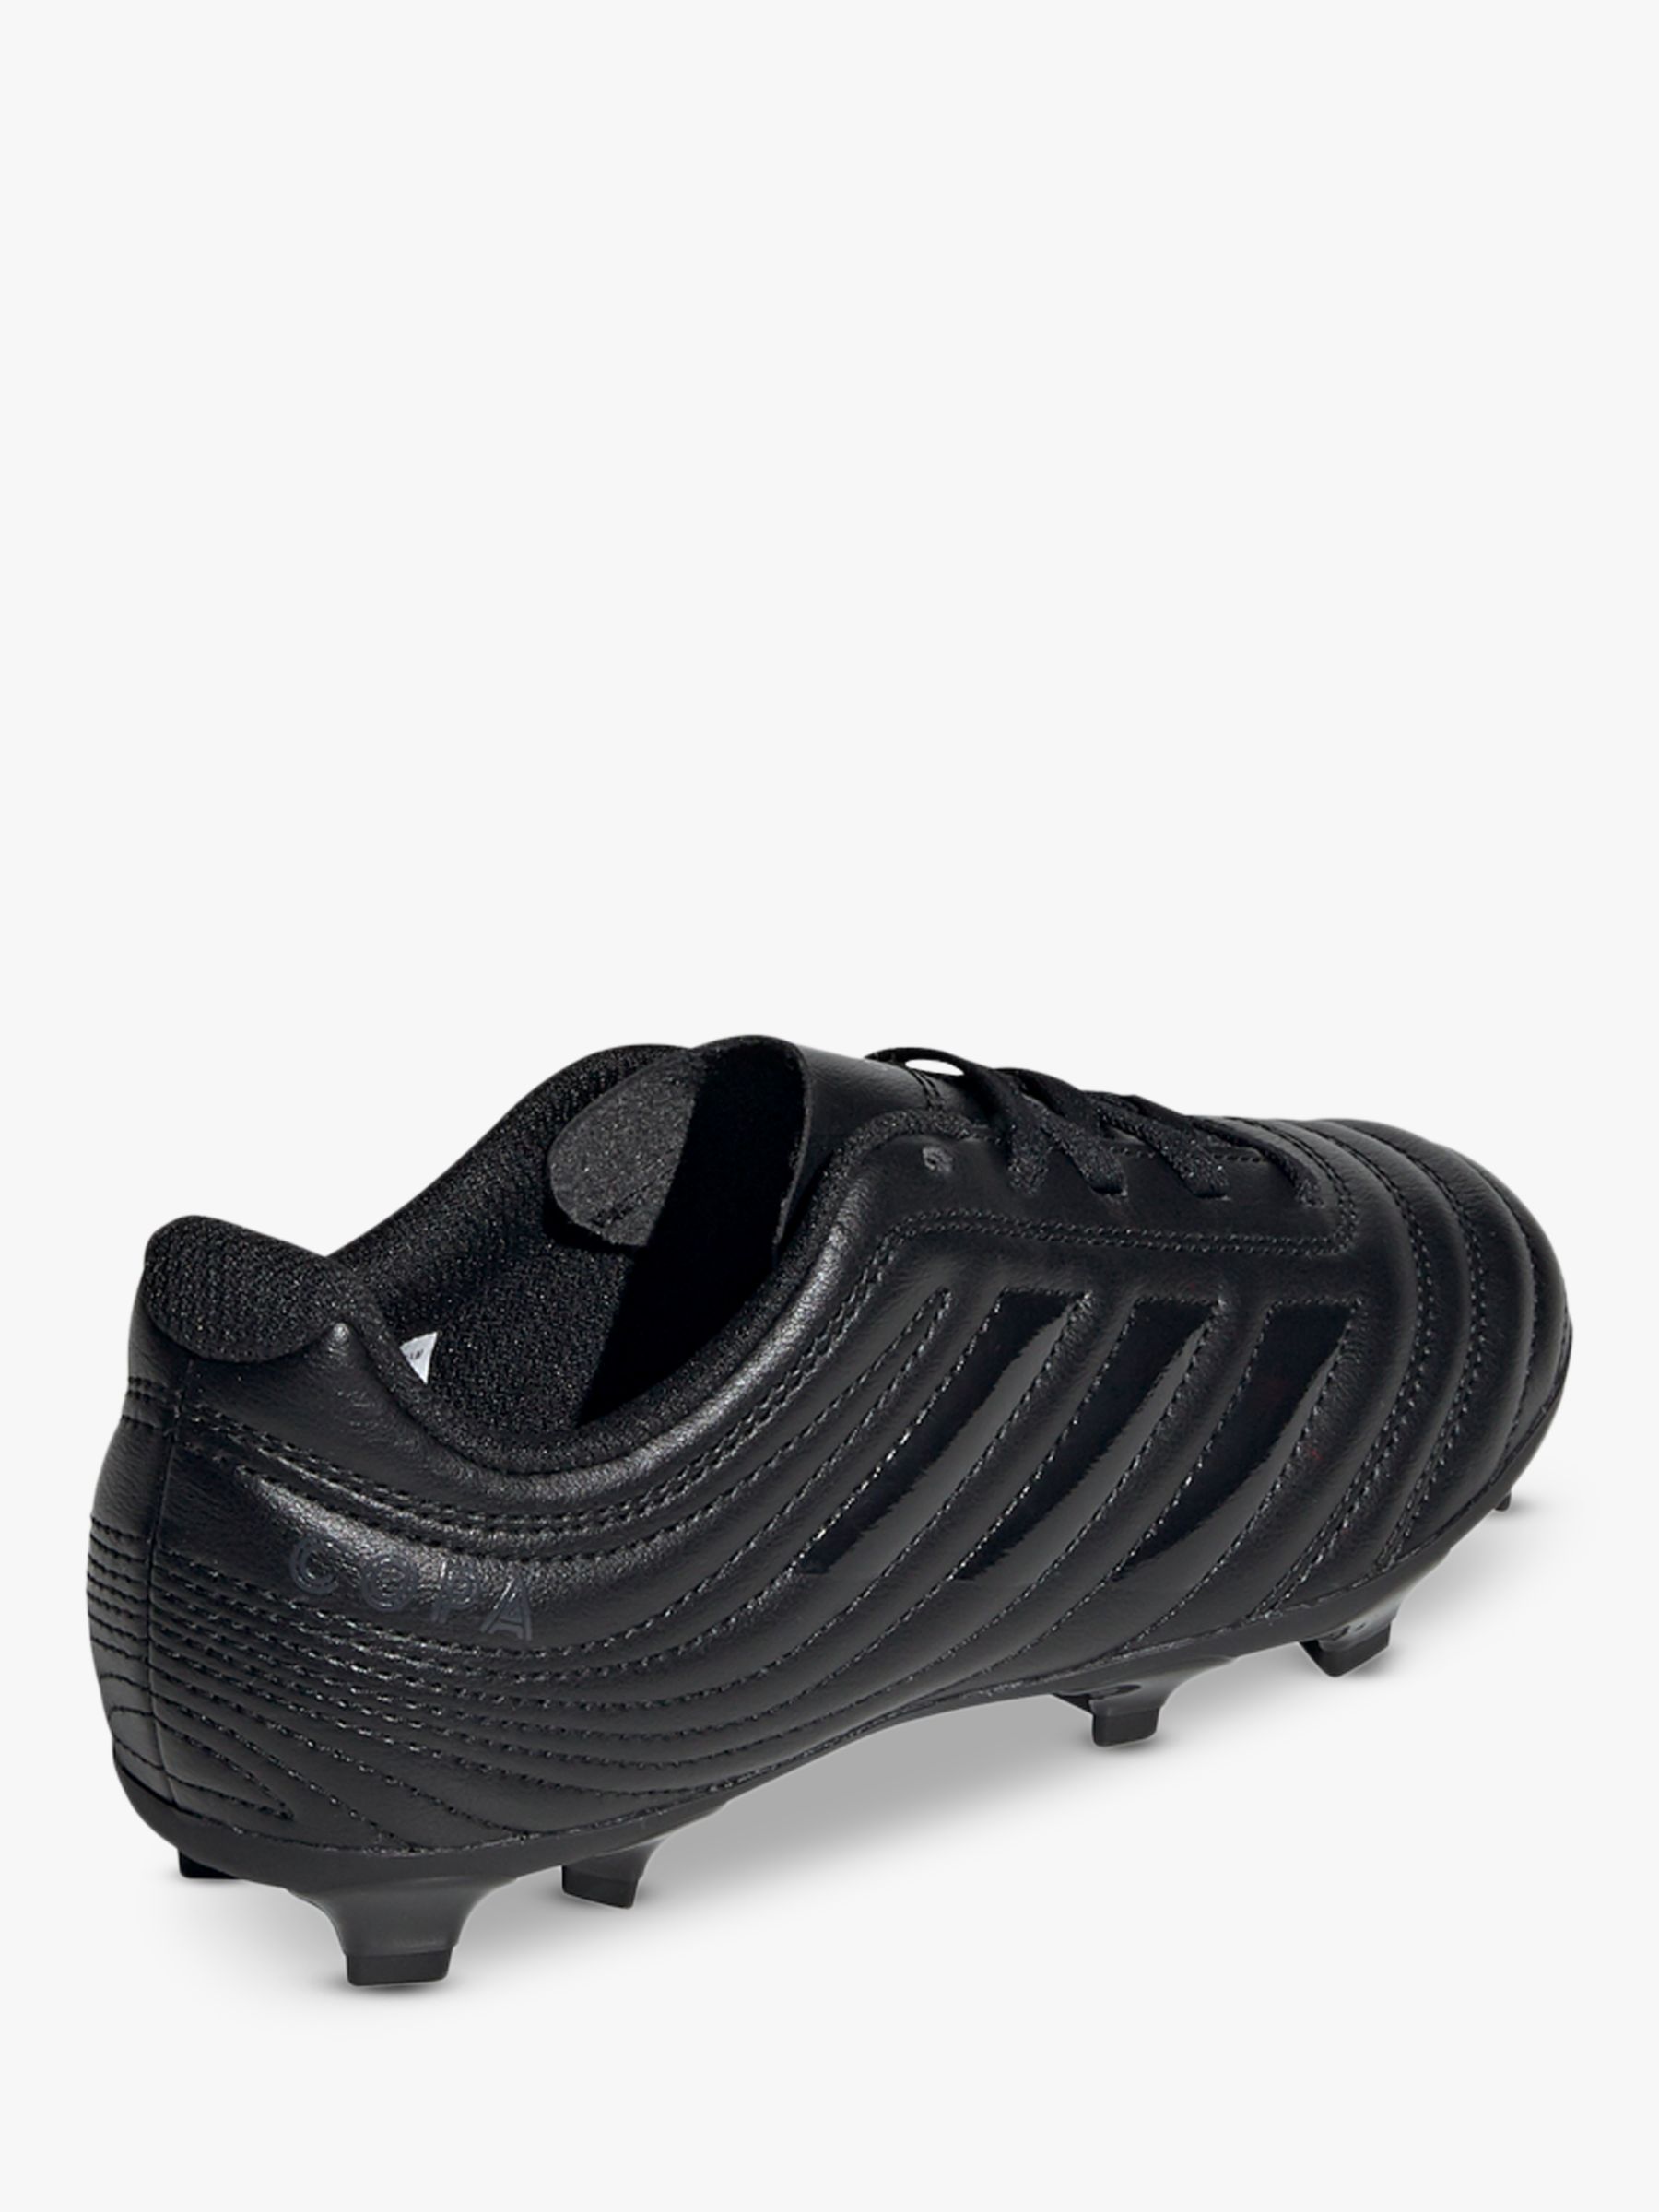 copa football shoes